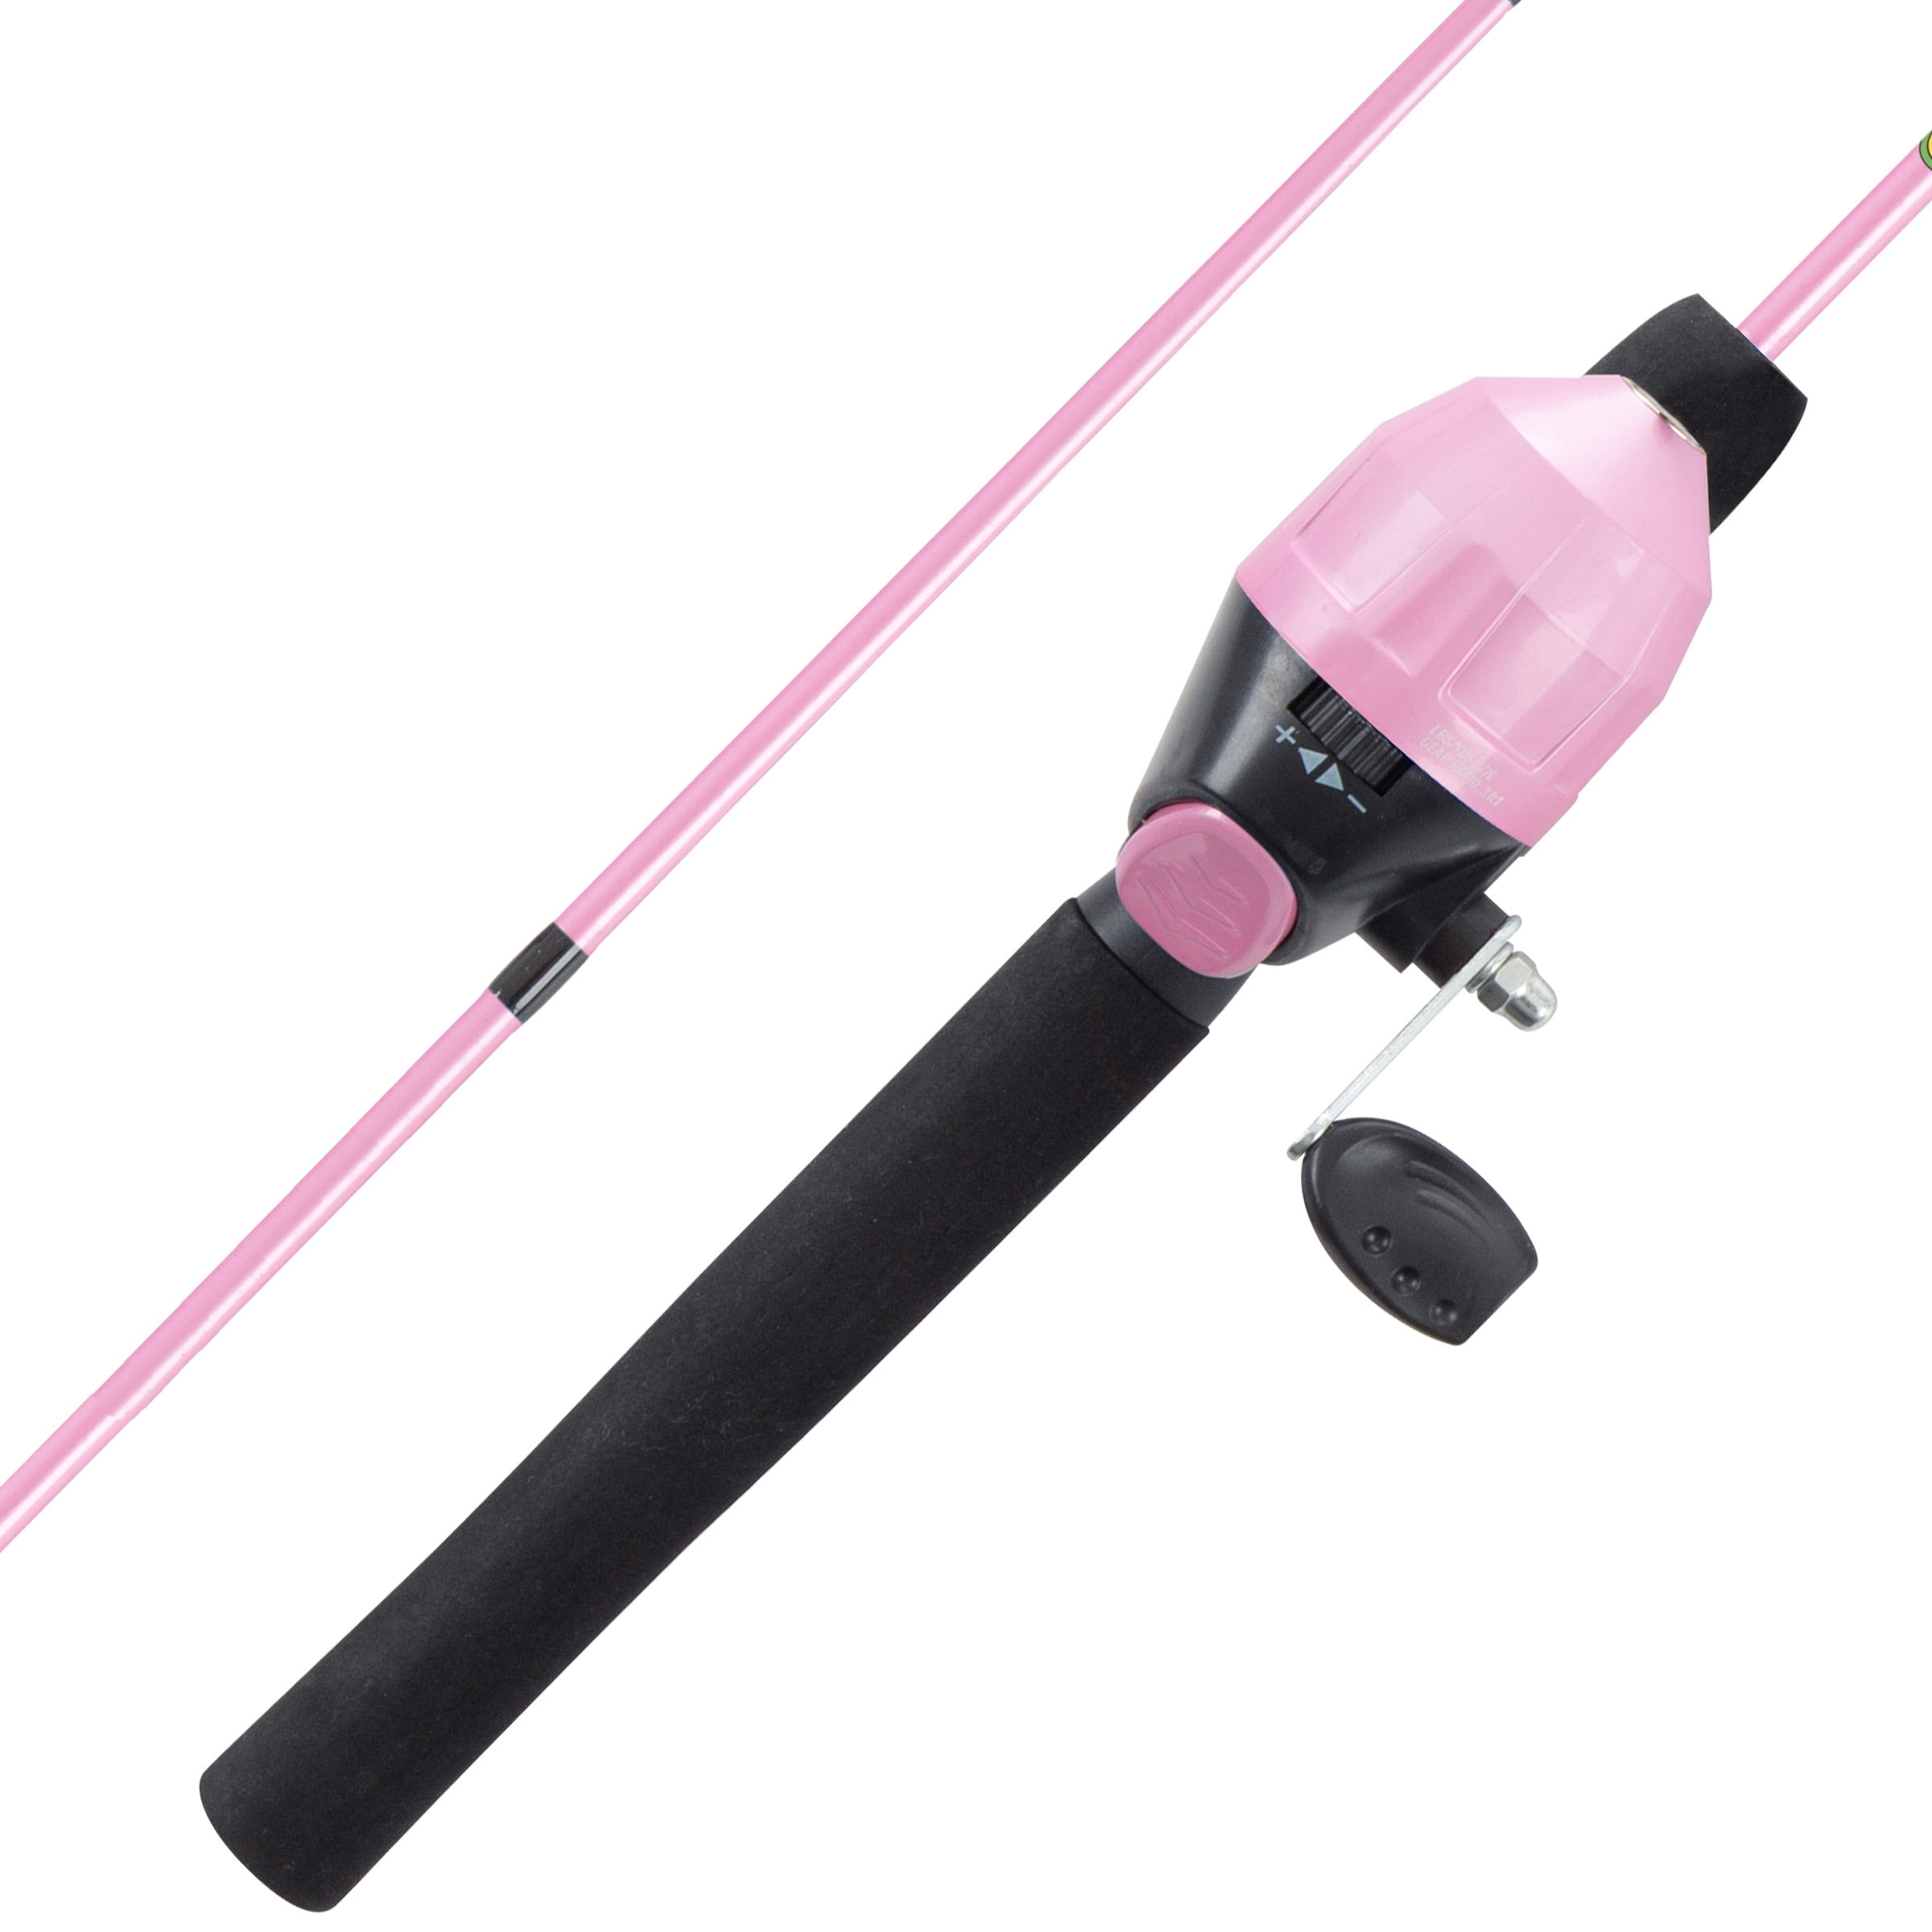 Youth Fishing Rod & Reel Combo-4'2” Fiberglass Pole, Spincast Reel